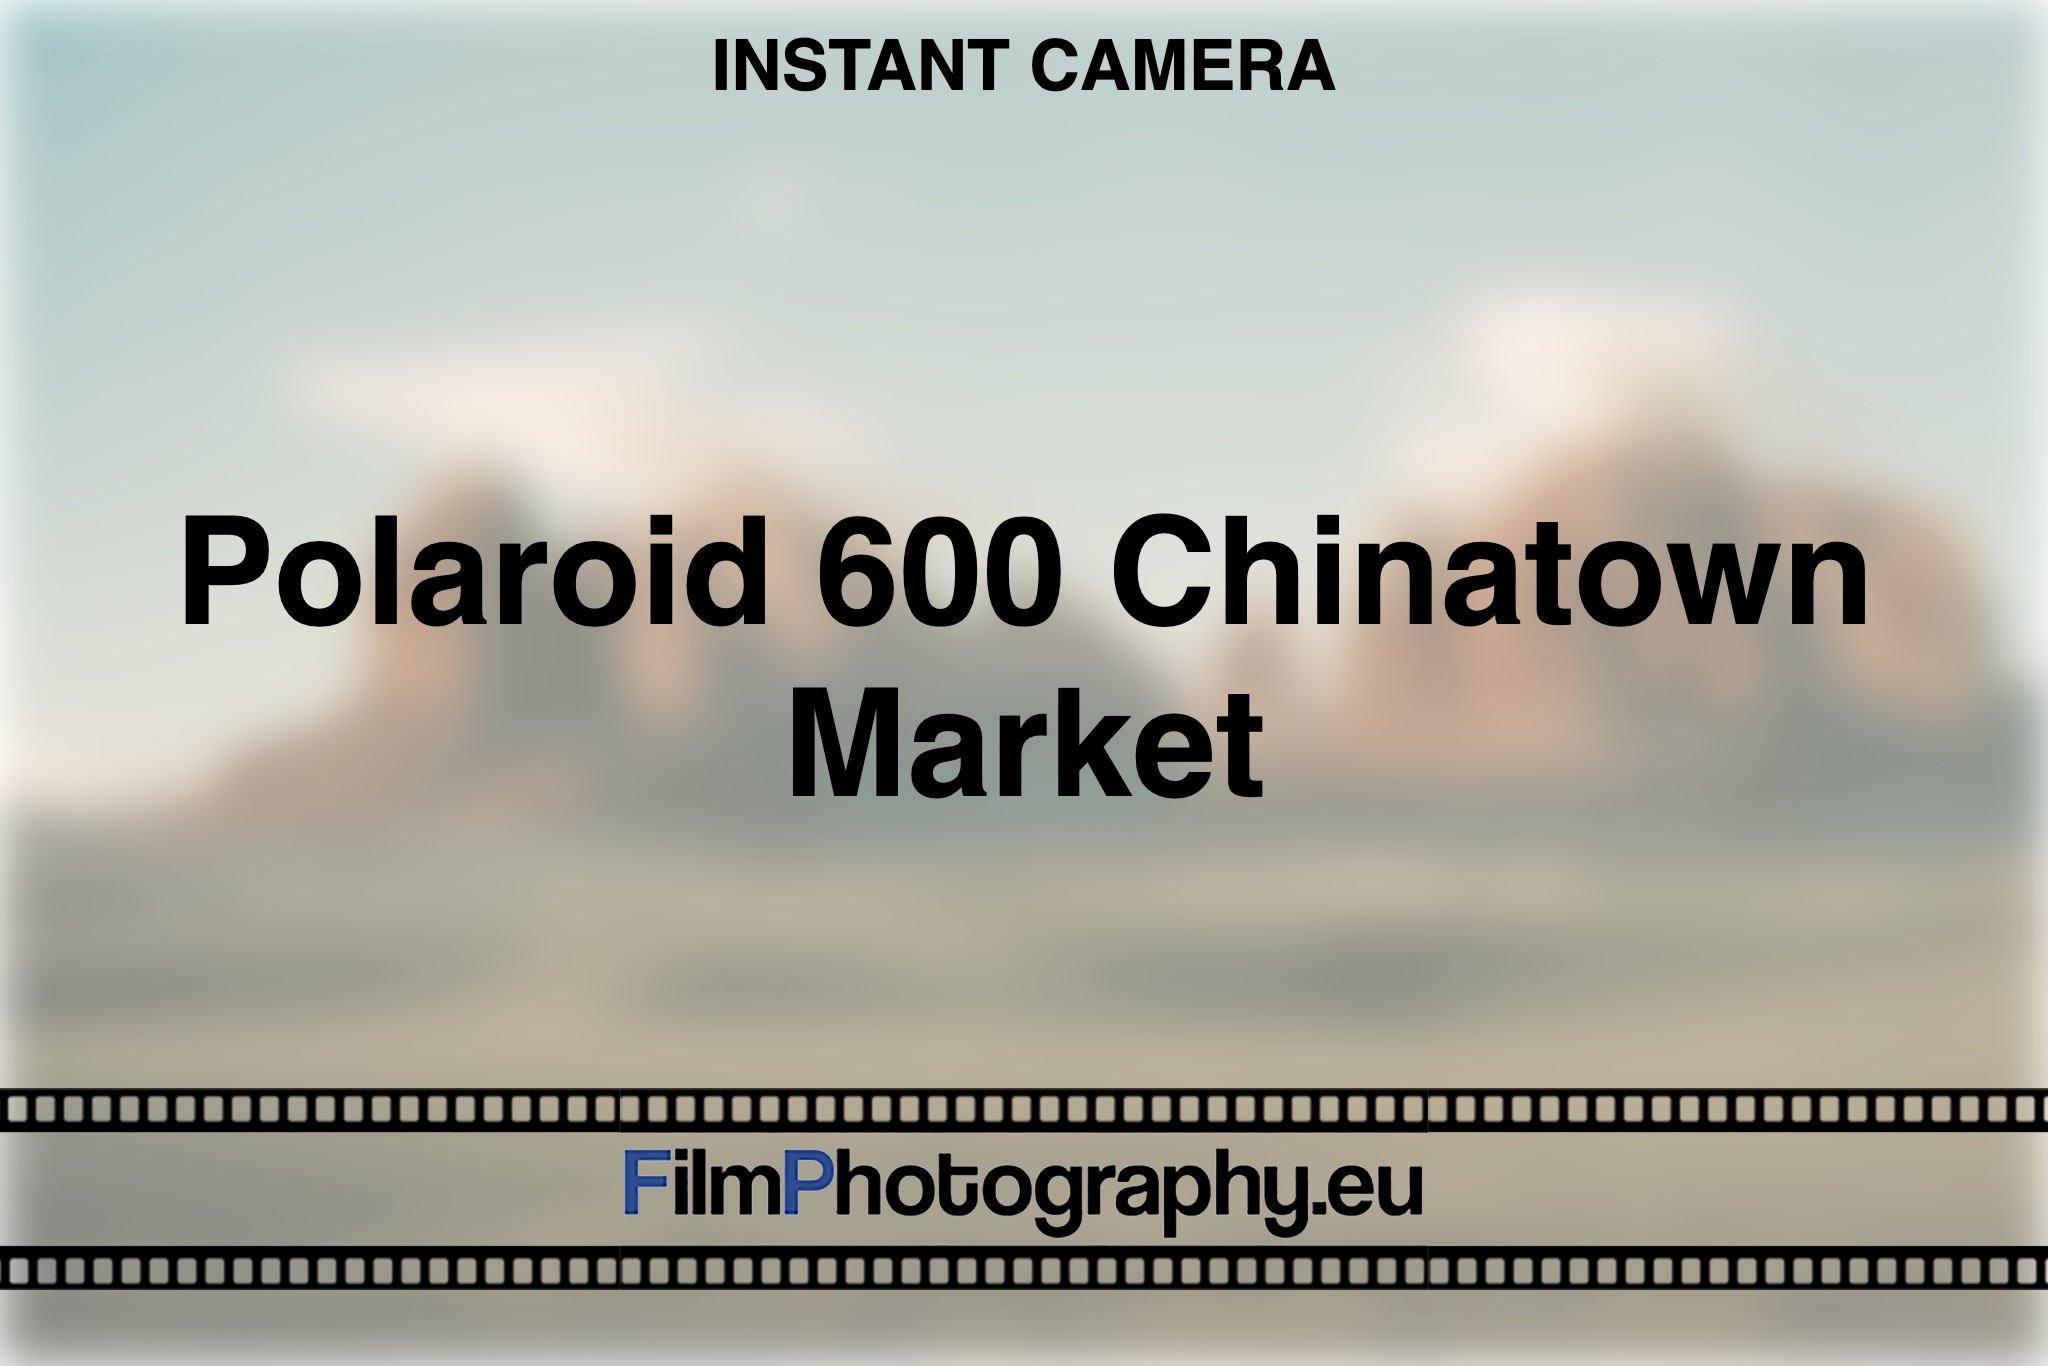 polaroid-600-chinatown-market-instant-camera-bnv